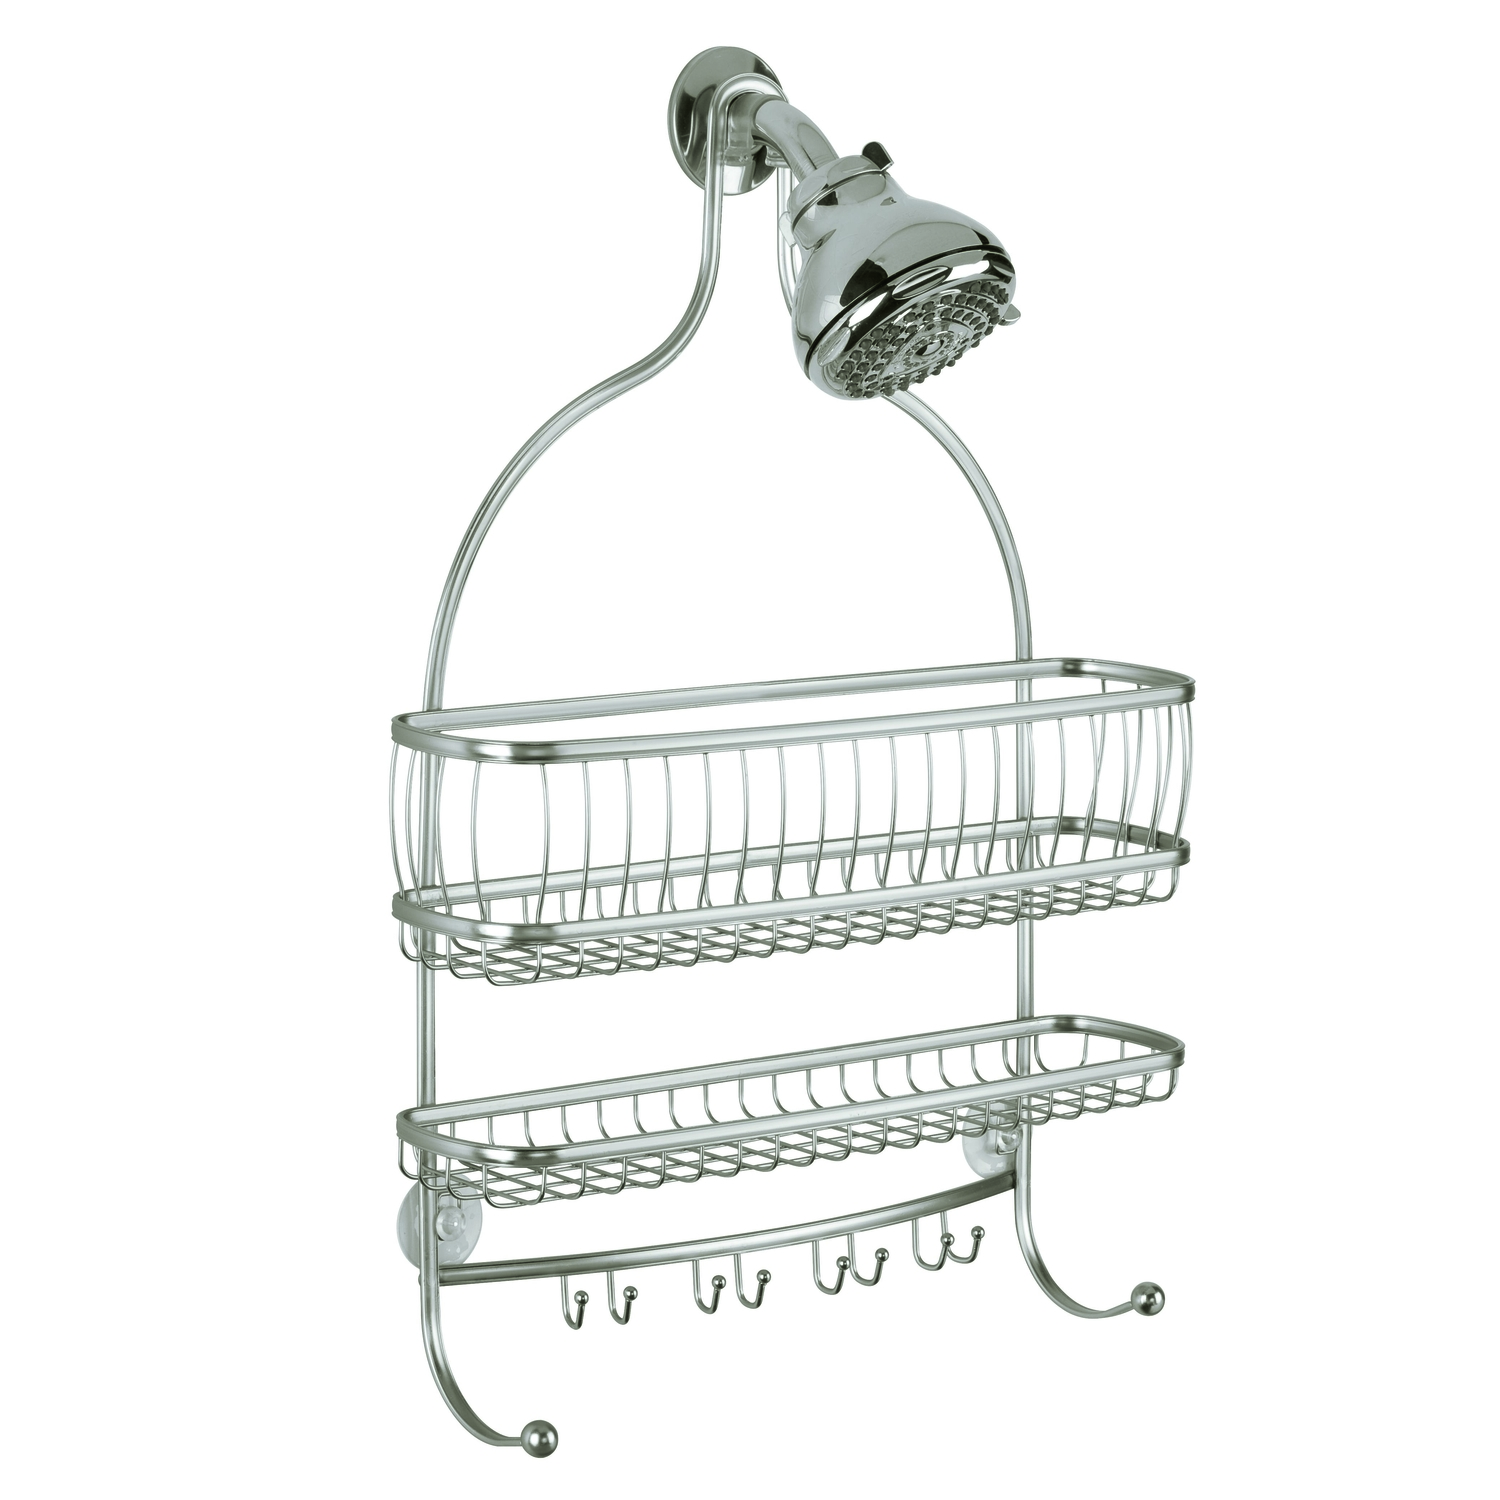 Interdesign Classico Shower Caddy - Silver